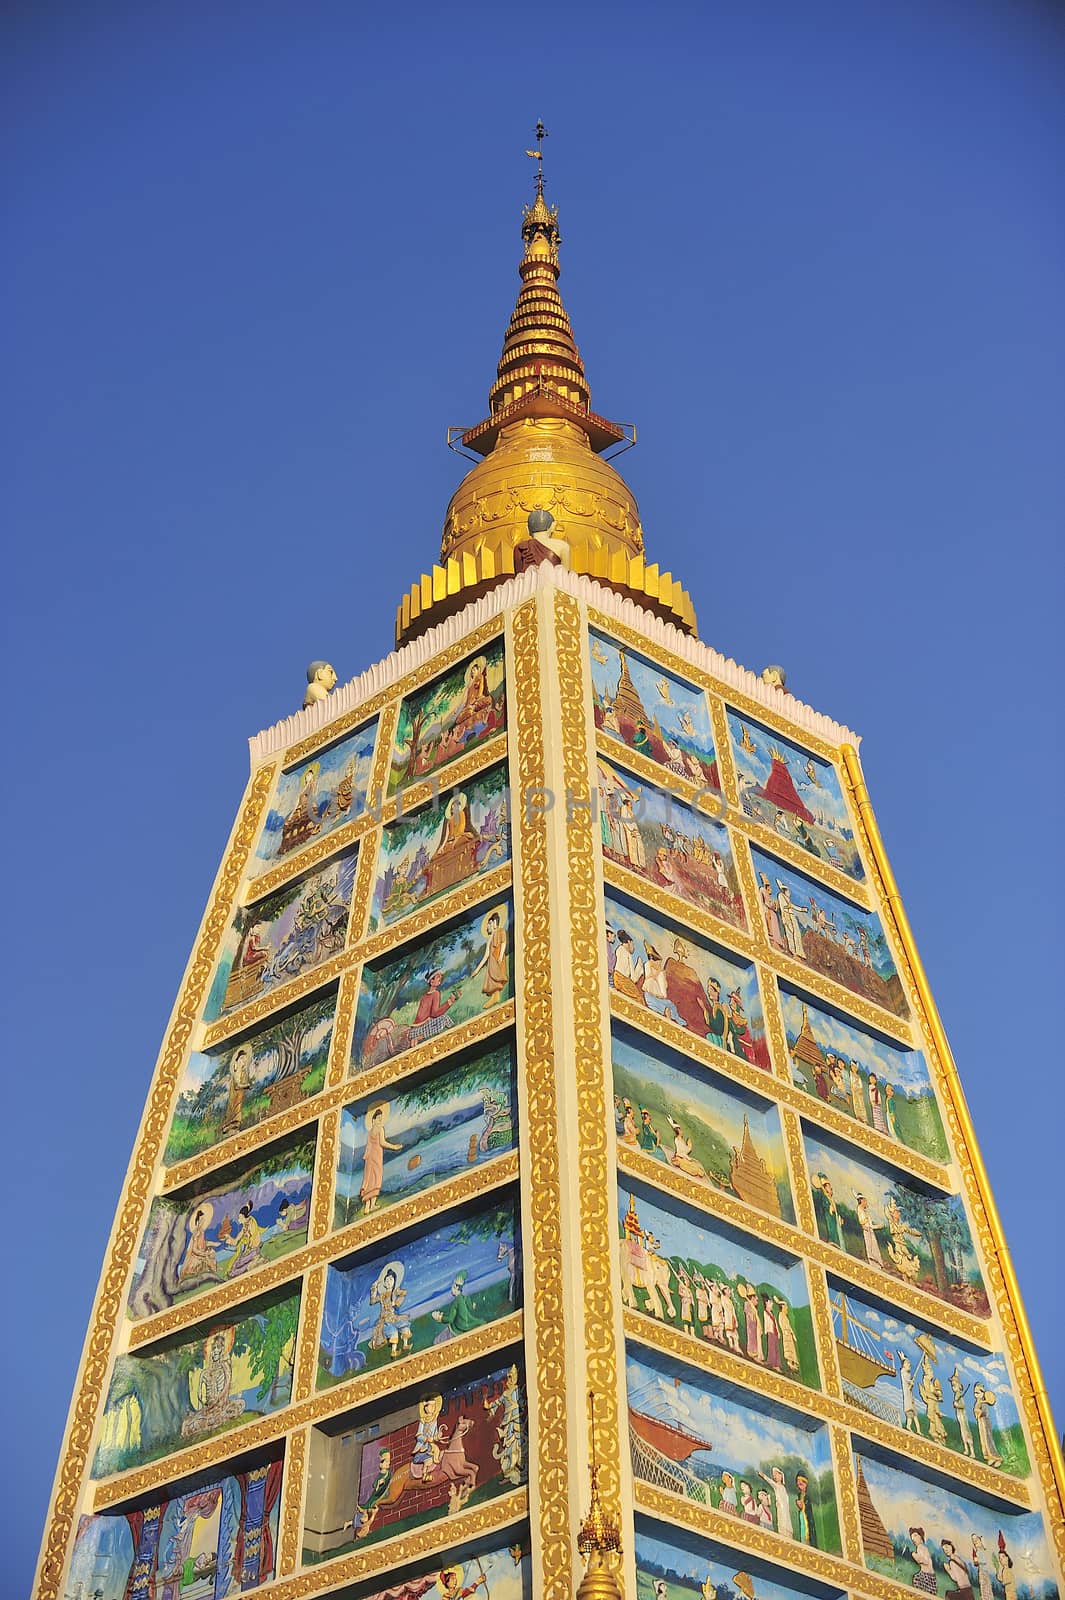 Part of the Shwedagon Pagoda in Yangon, Myanmar by think4photop